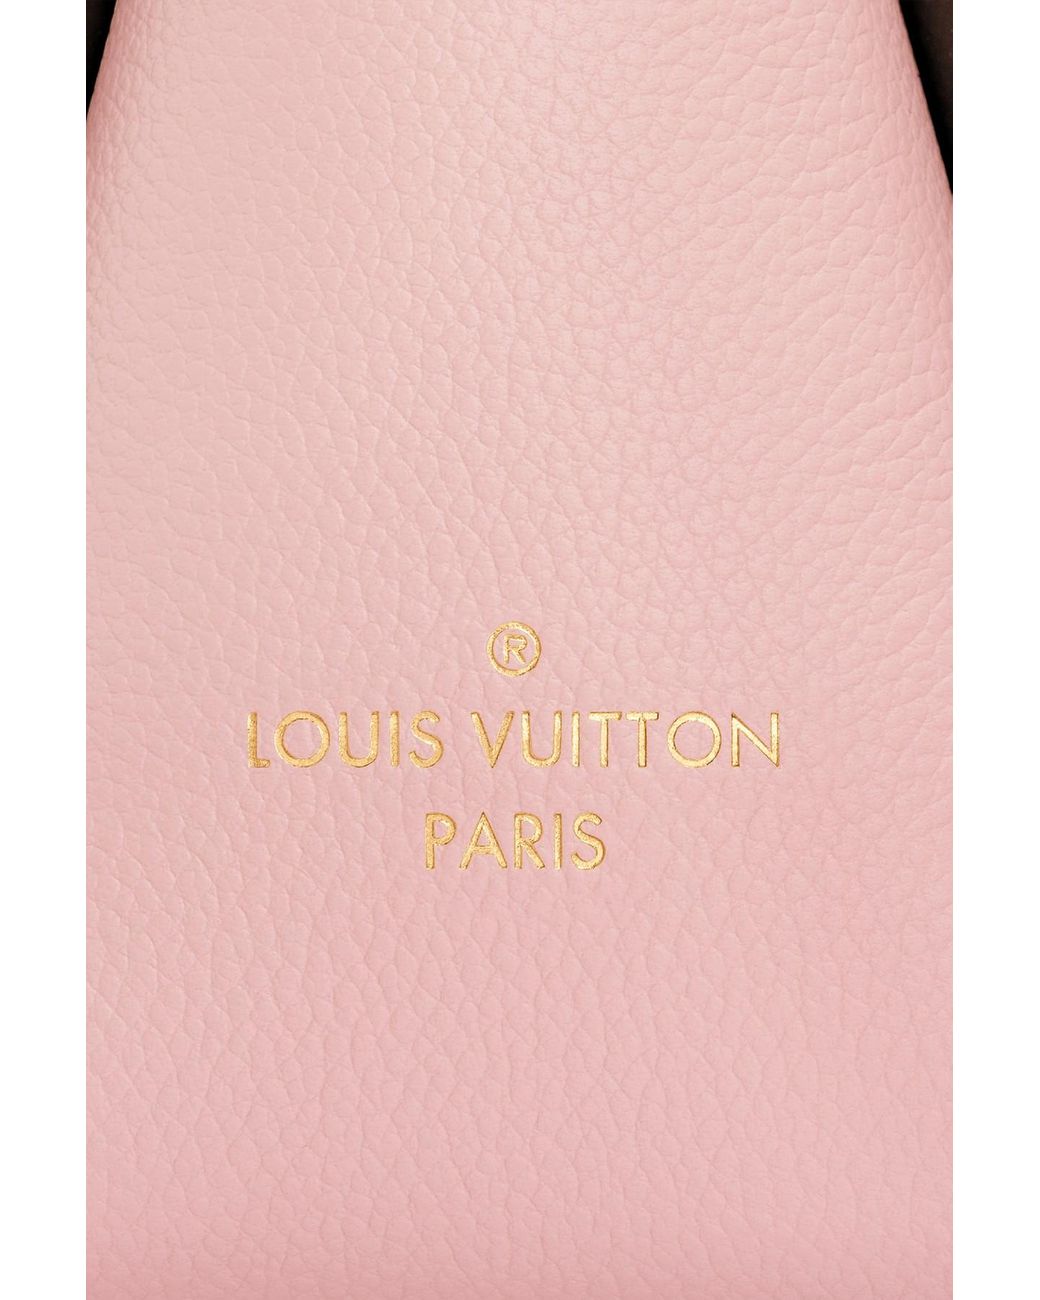 Pre-Owned Louis Vuitton Surene BB Bag 205760/139